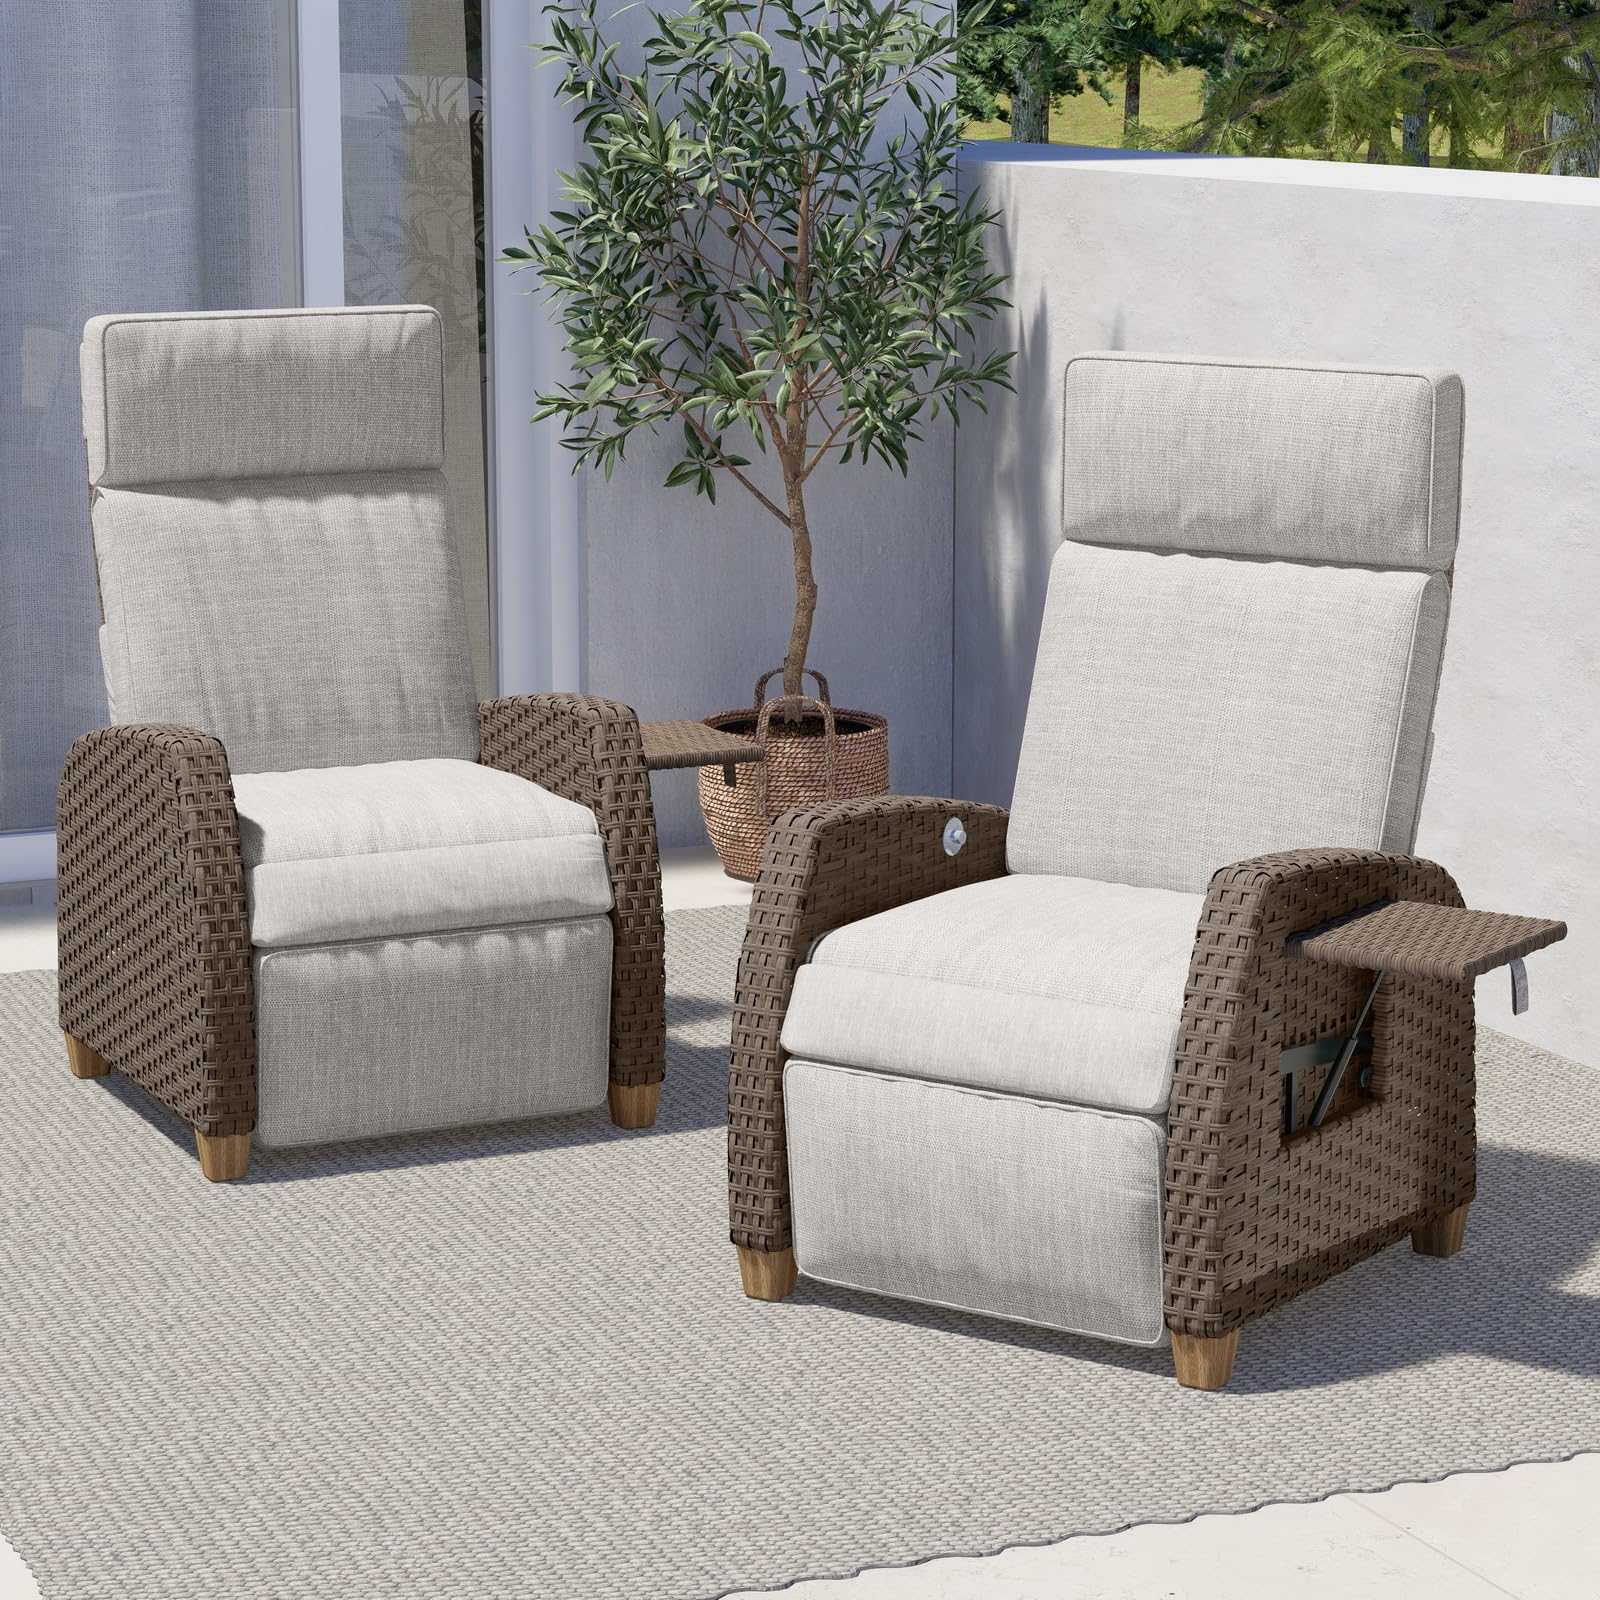 patio recliner chair